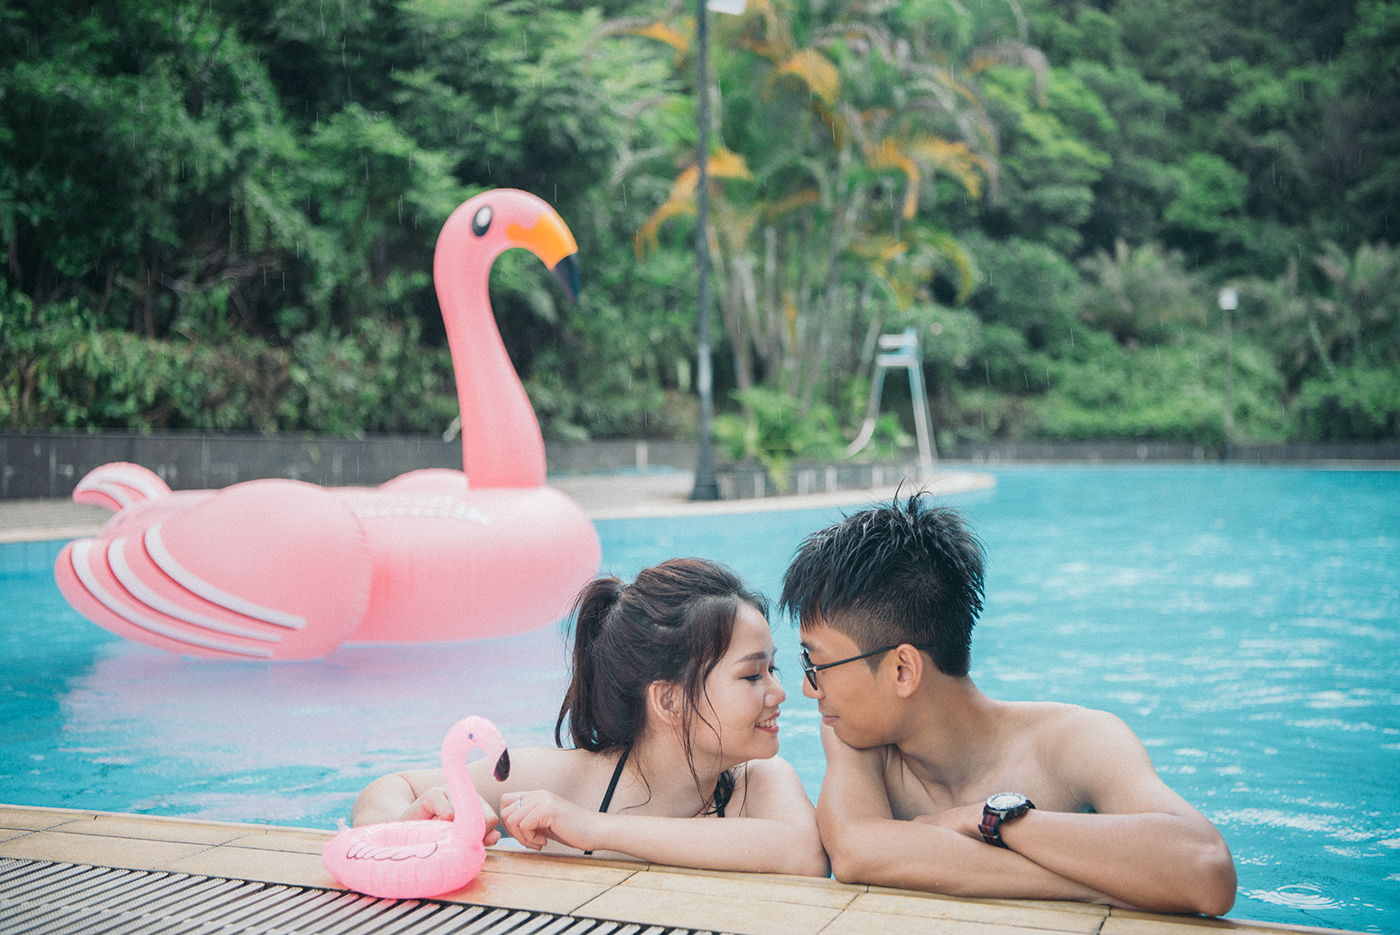 swimming Pool party couples Lovers flamingos pink bikini